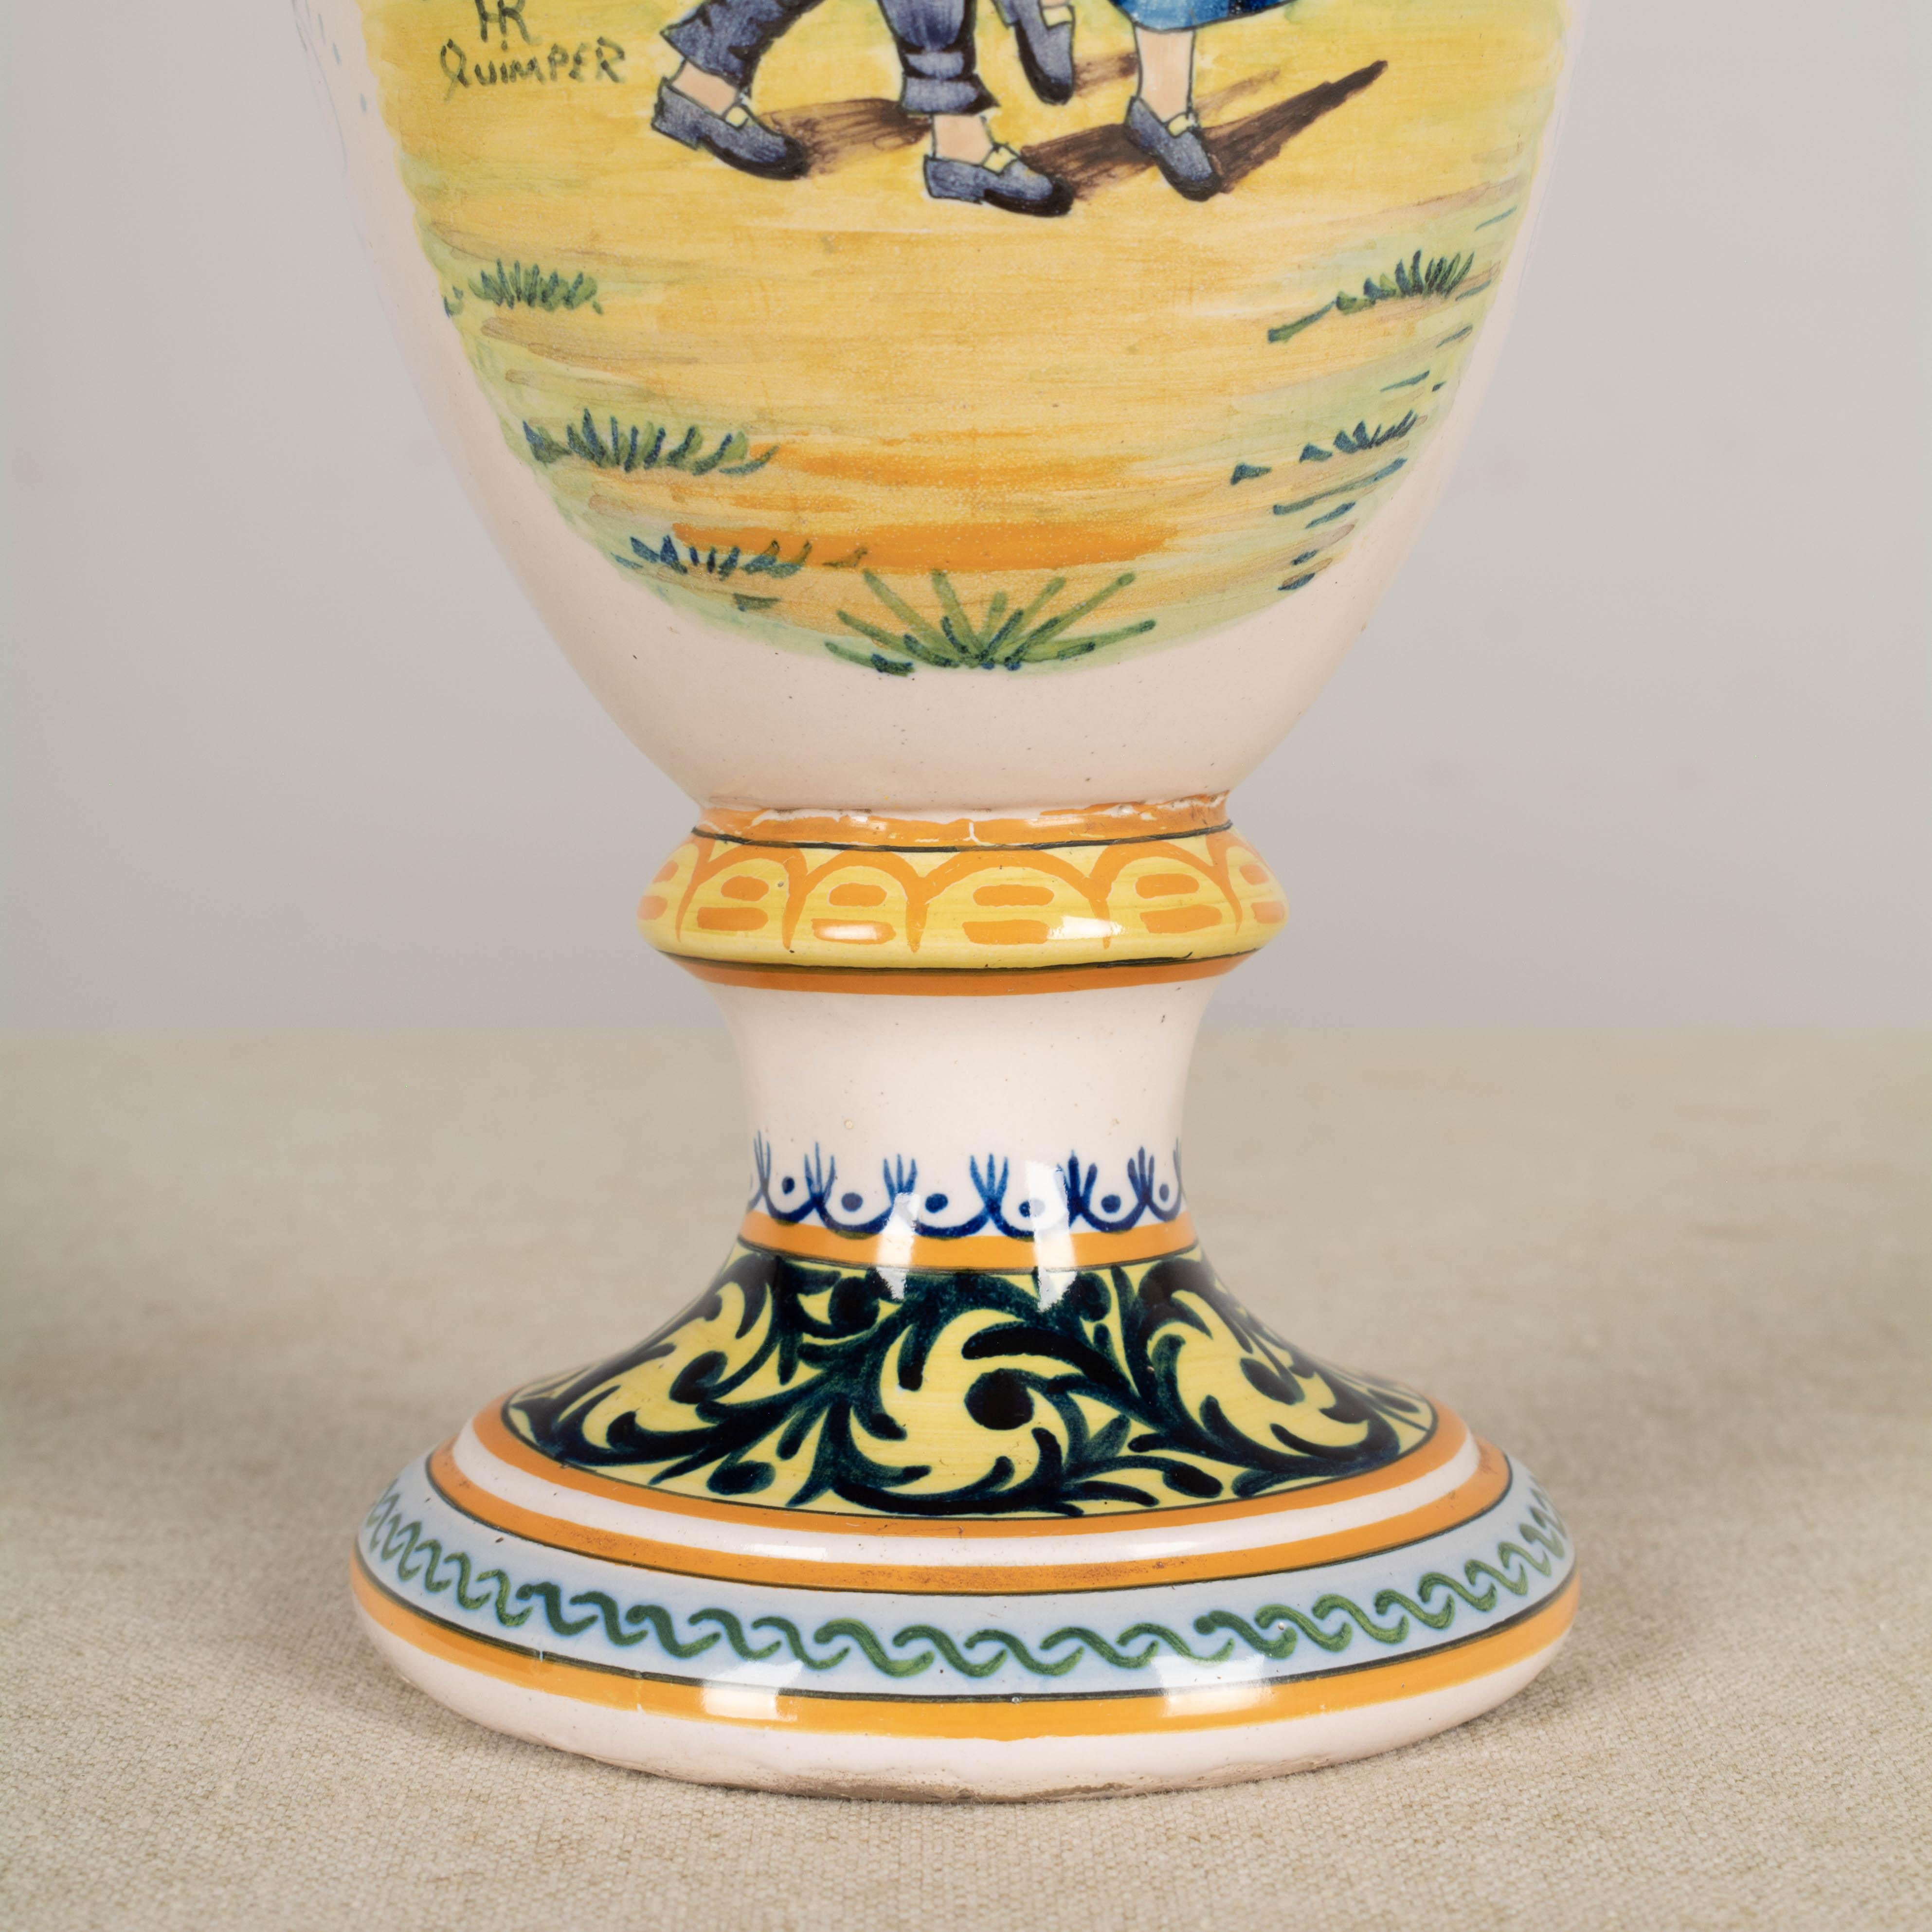 French HR Quimper Ceramic Vase For Sale 6